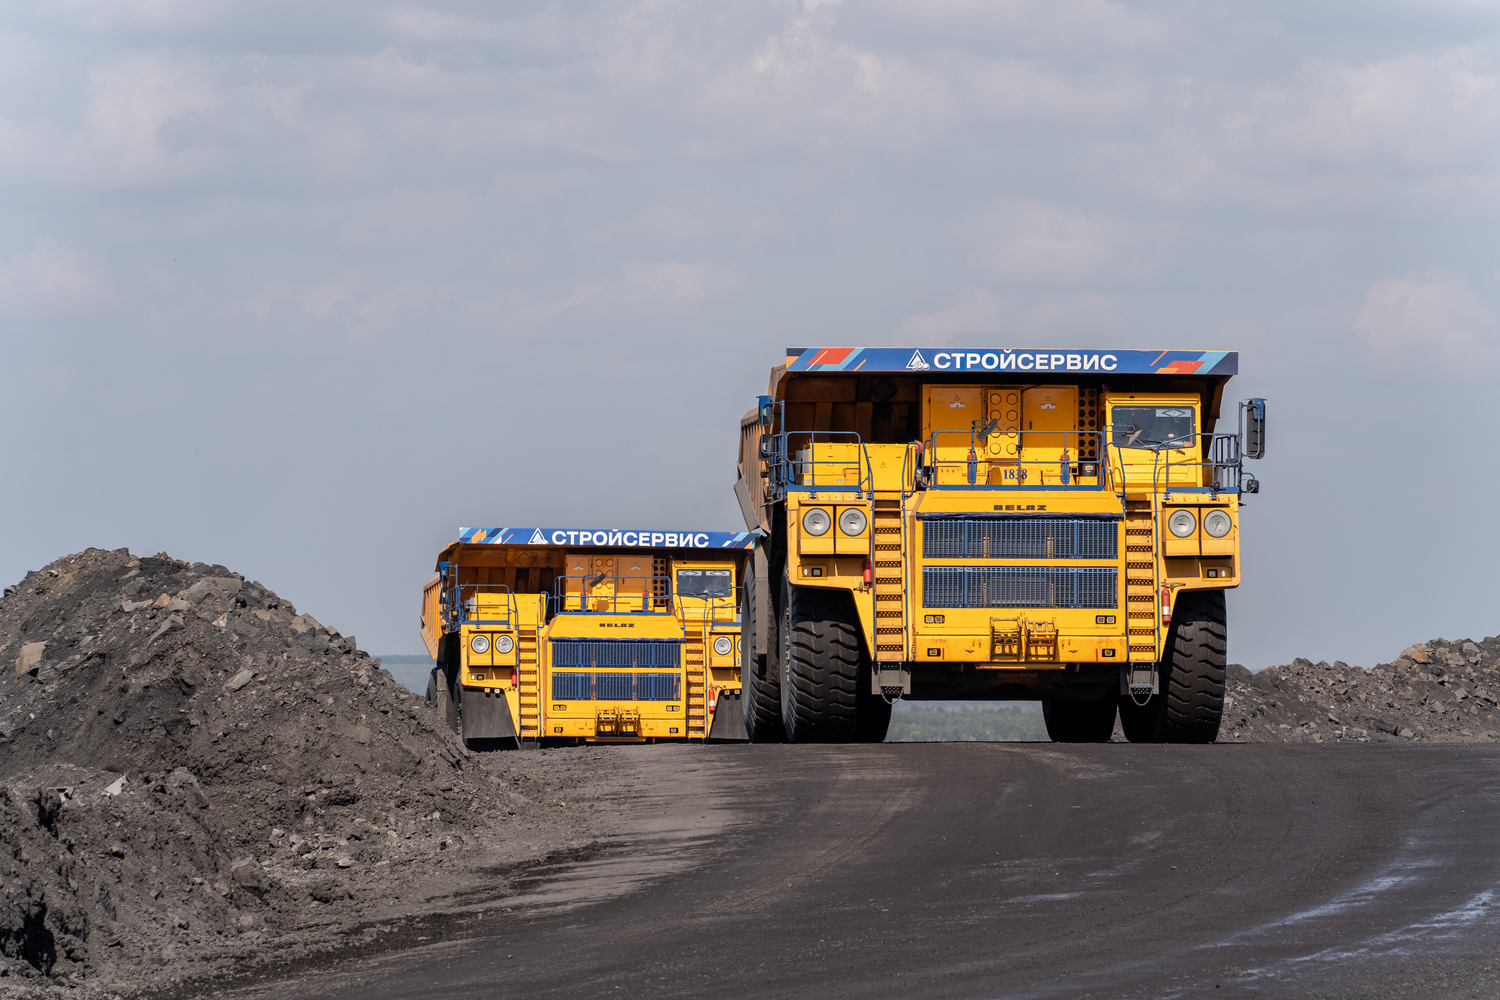 11,9 млн тонн угля отгрузили потребителям за 10 месяцев 2022 года предприятия АО Стройсервис. Стройсервис